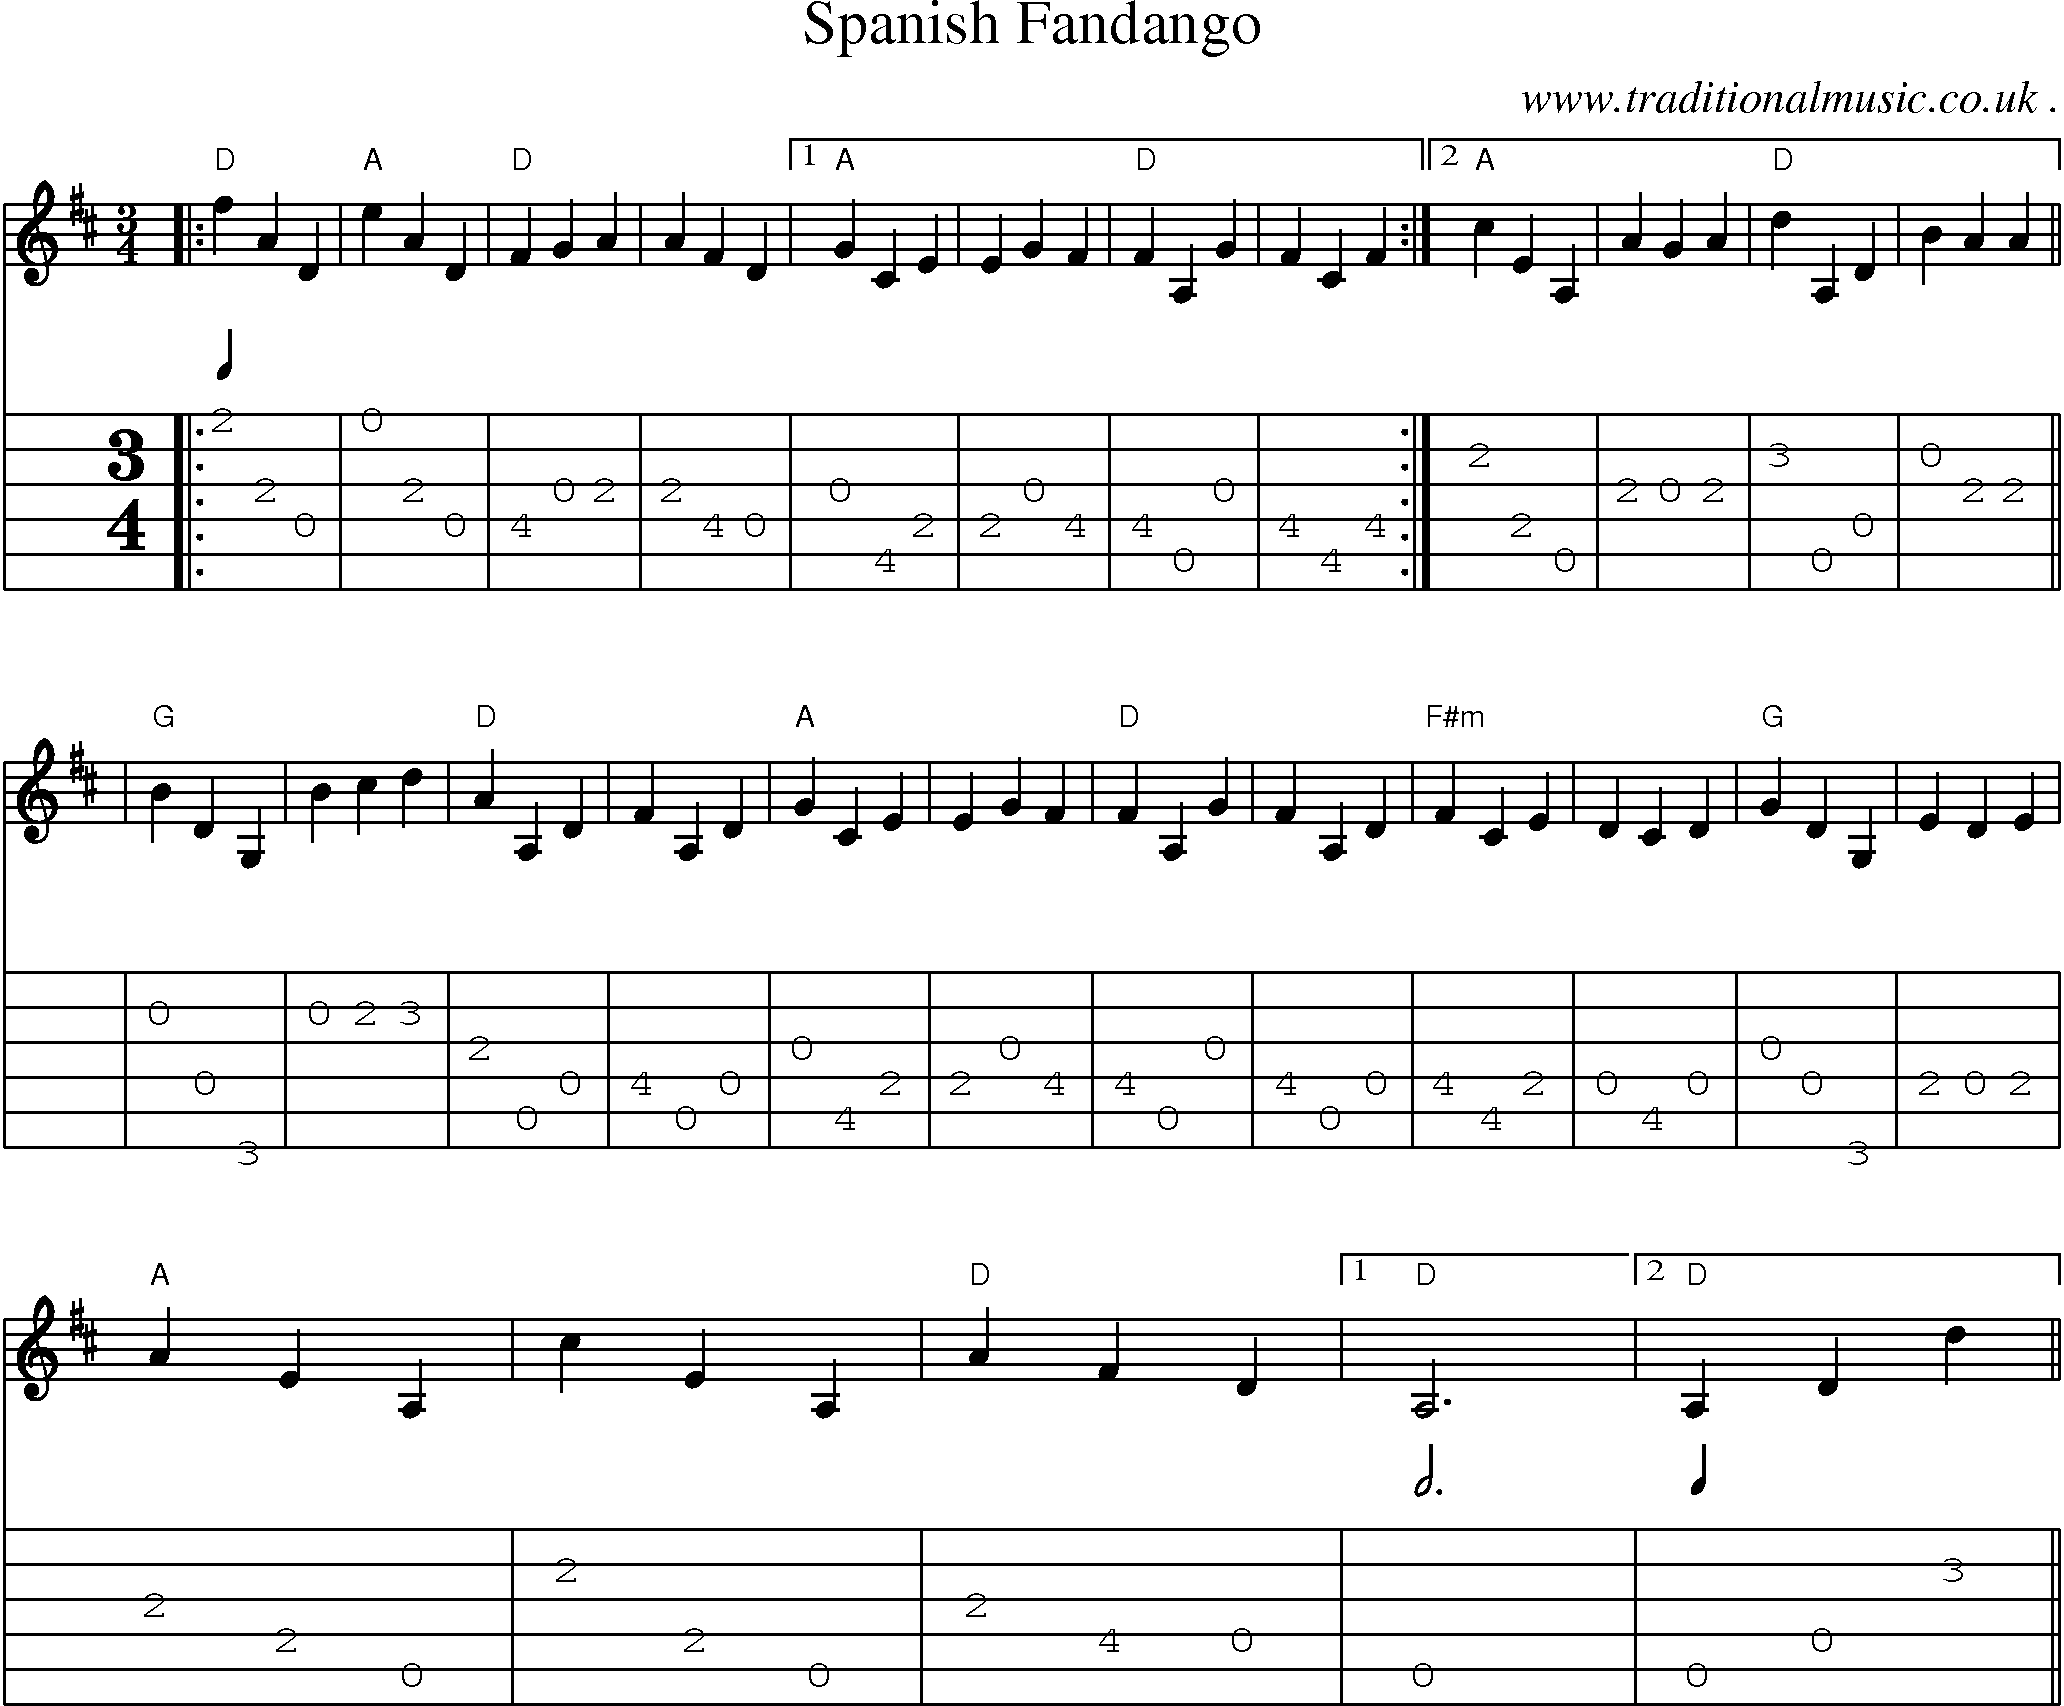 Music Score and Guitar Tabs for Spanish Fandango